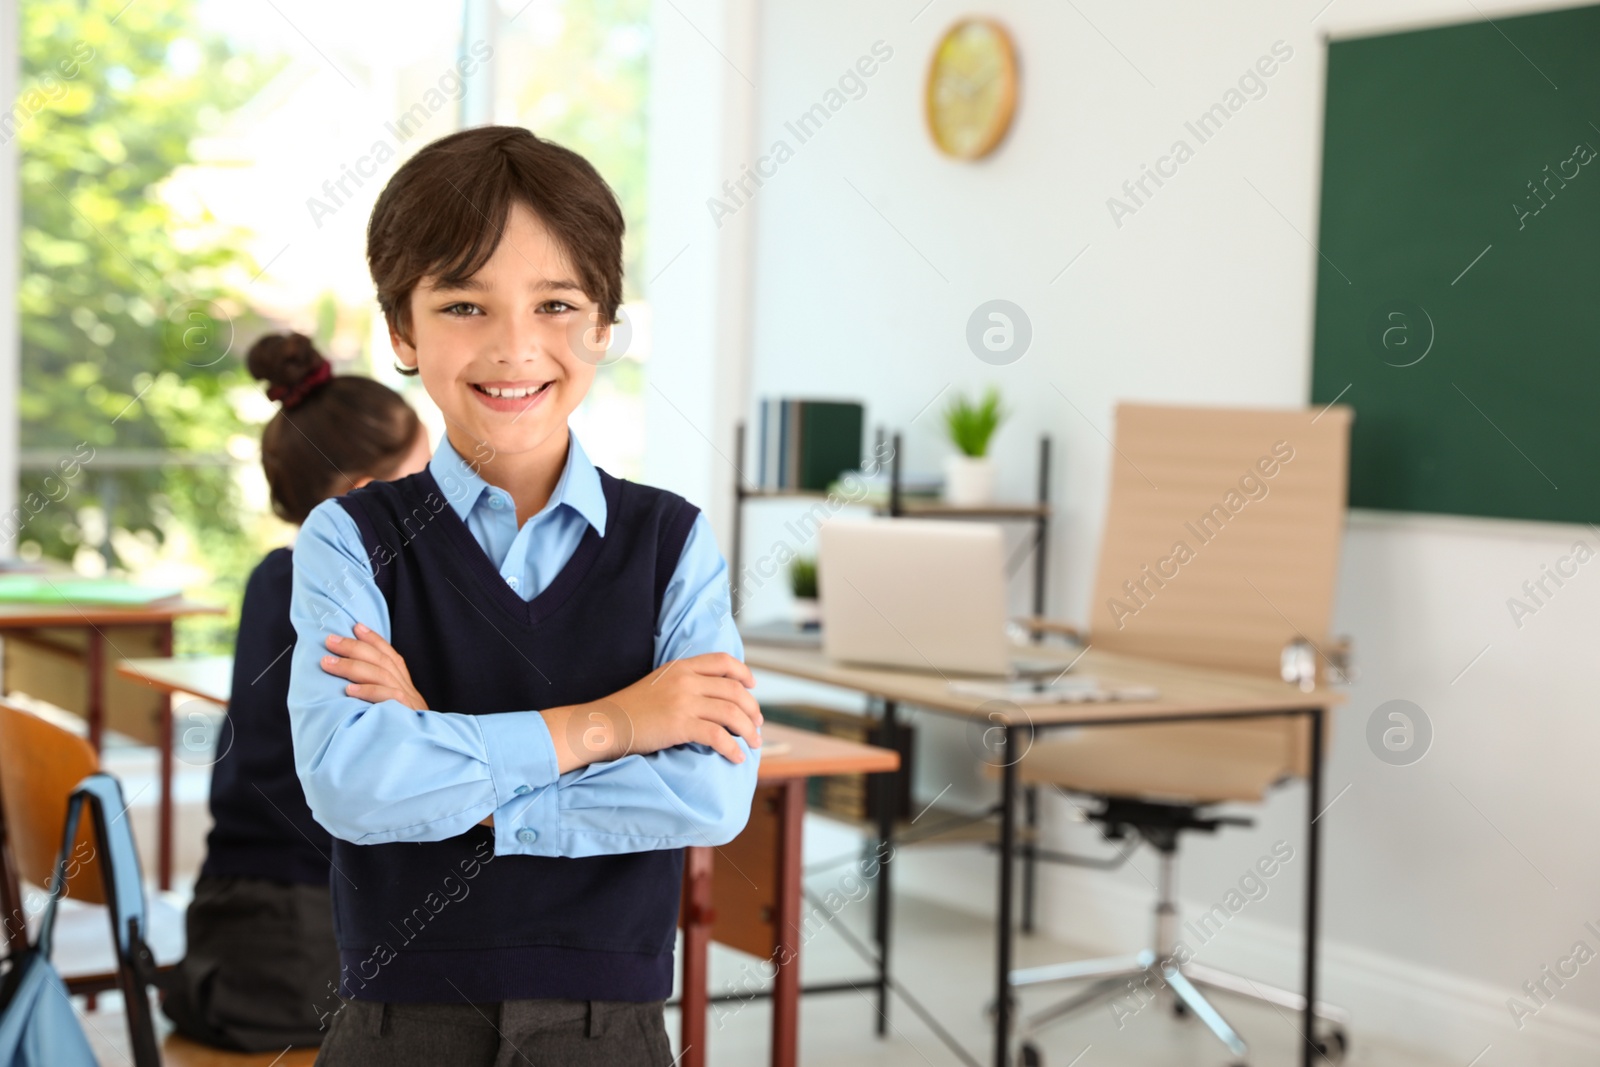 Photo of Boy wearing new school uniform in classroom